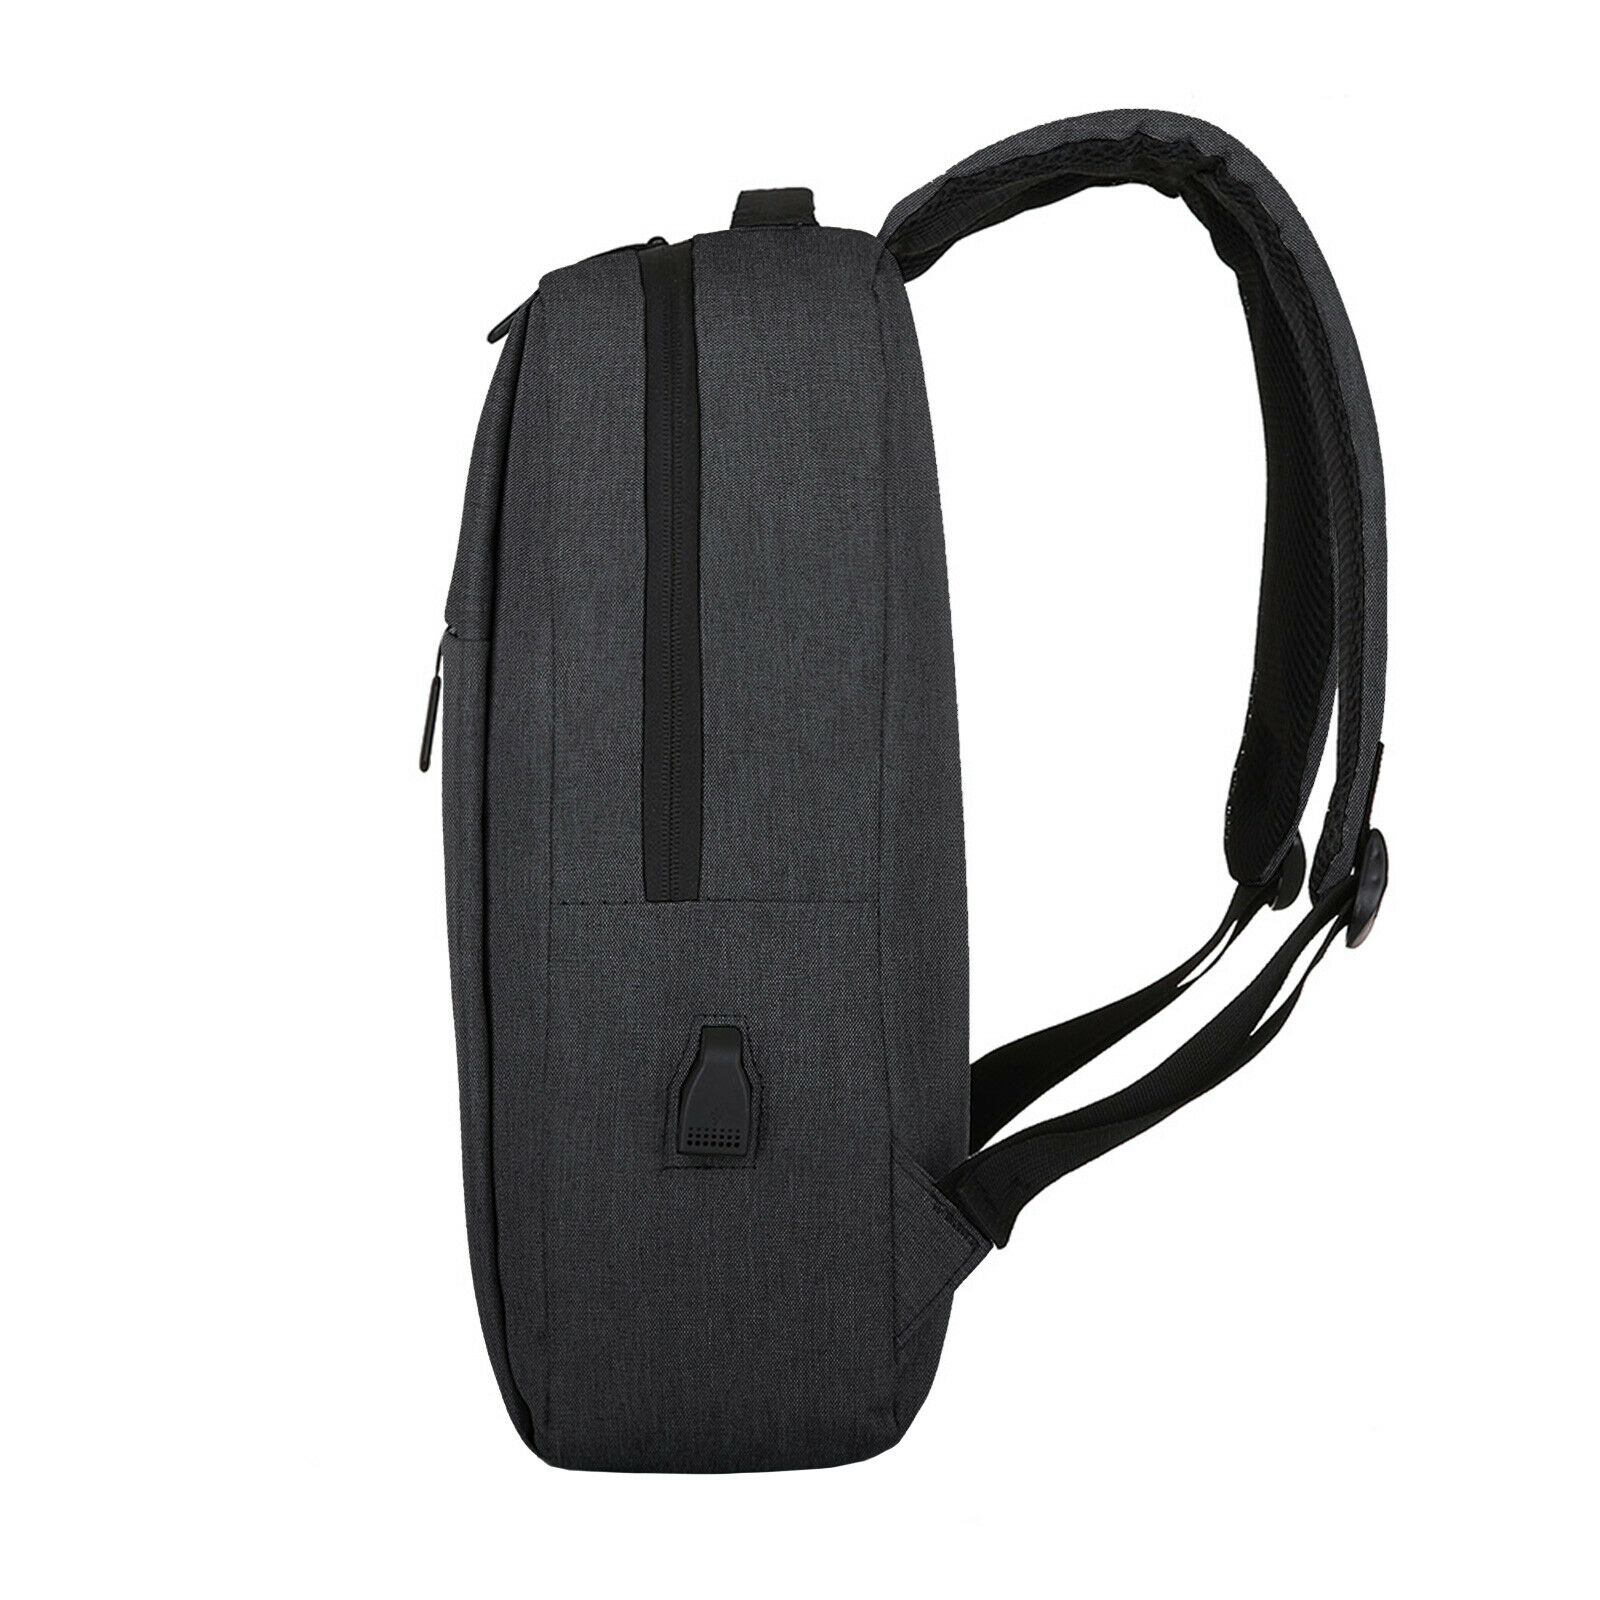 Novaa Bags 16" Slim Casual Waterproof Laptop Backpack with USB Charging Port Black - image 5 of 5